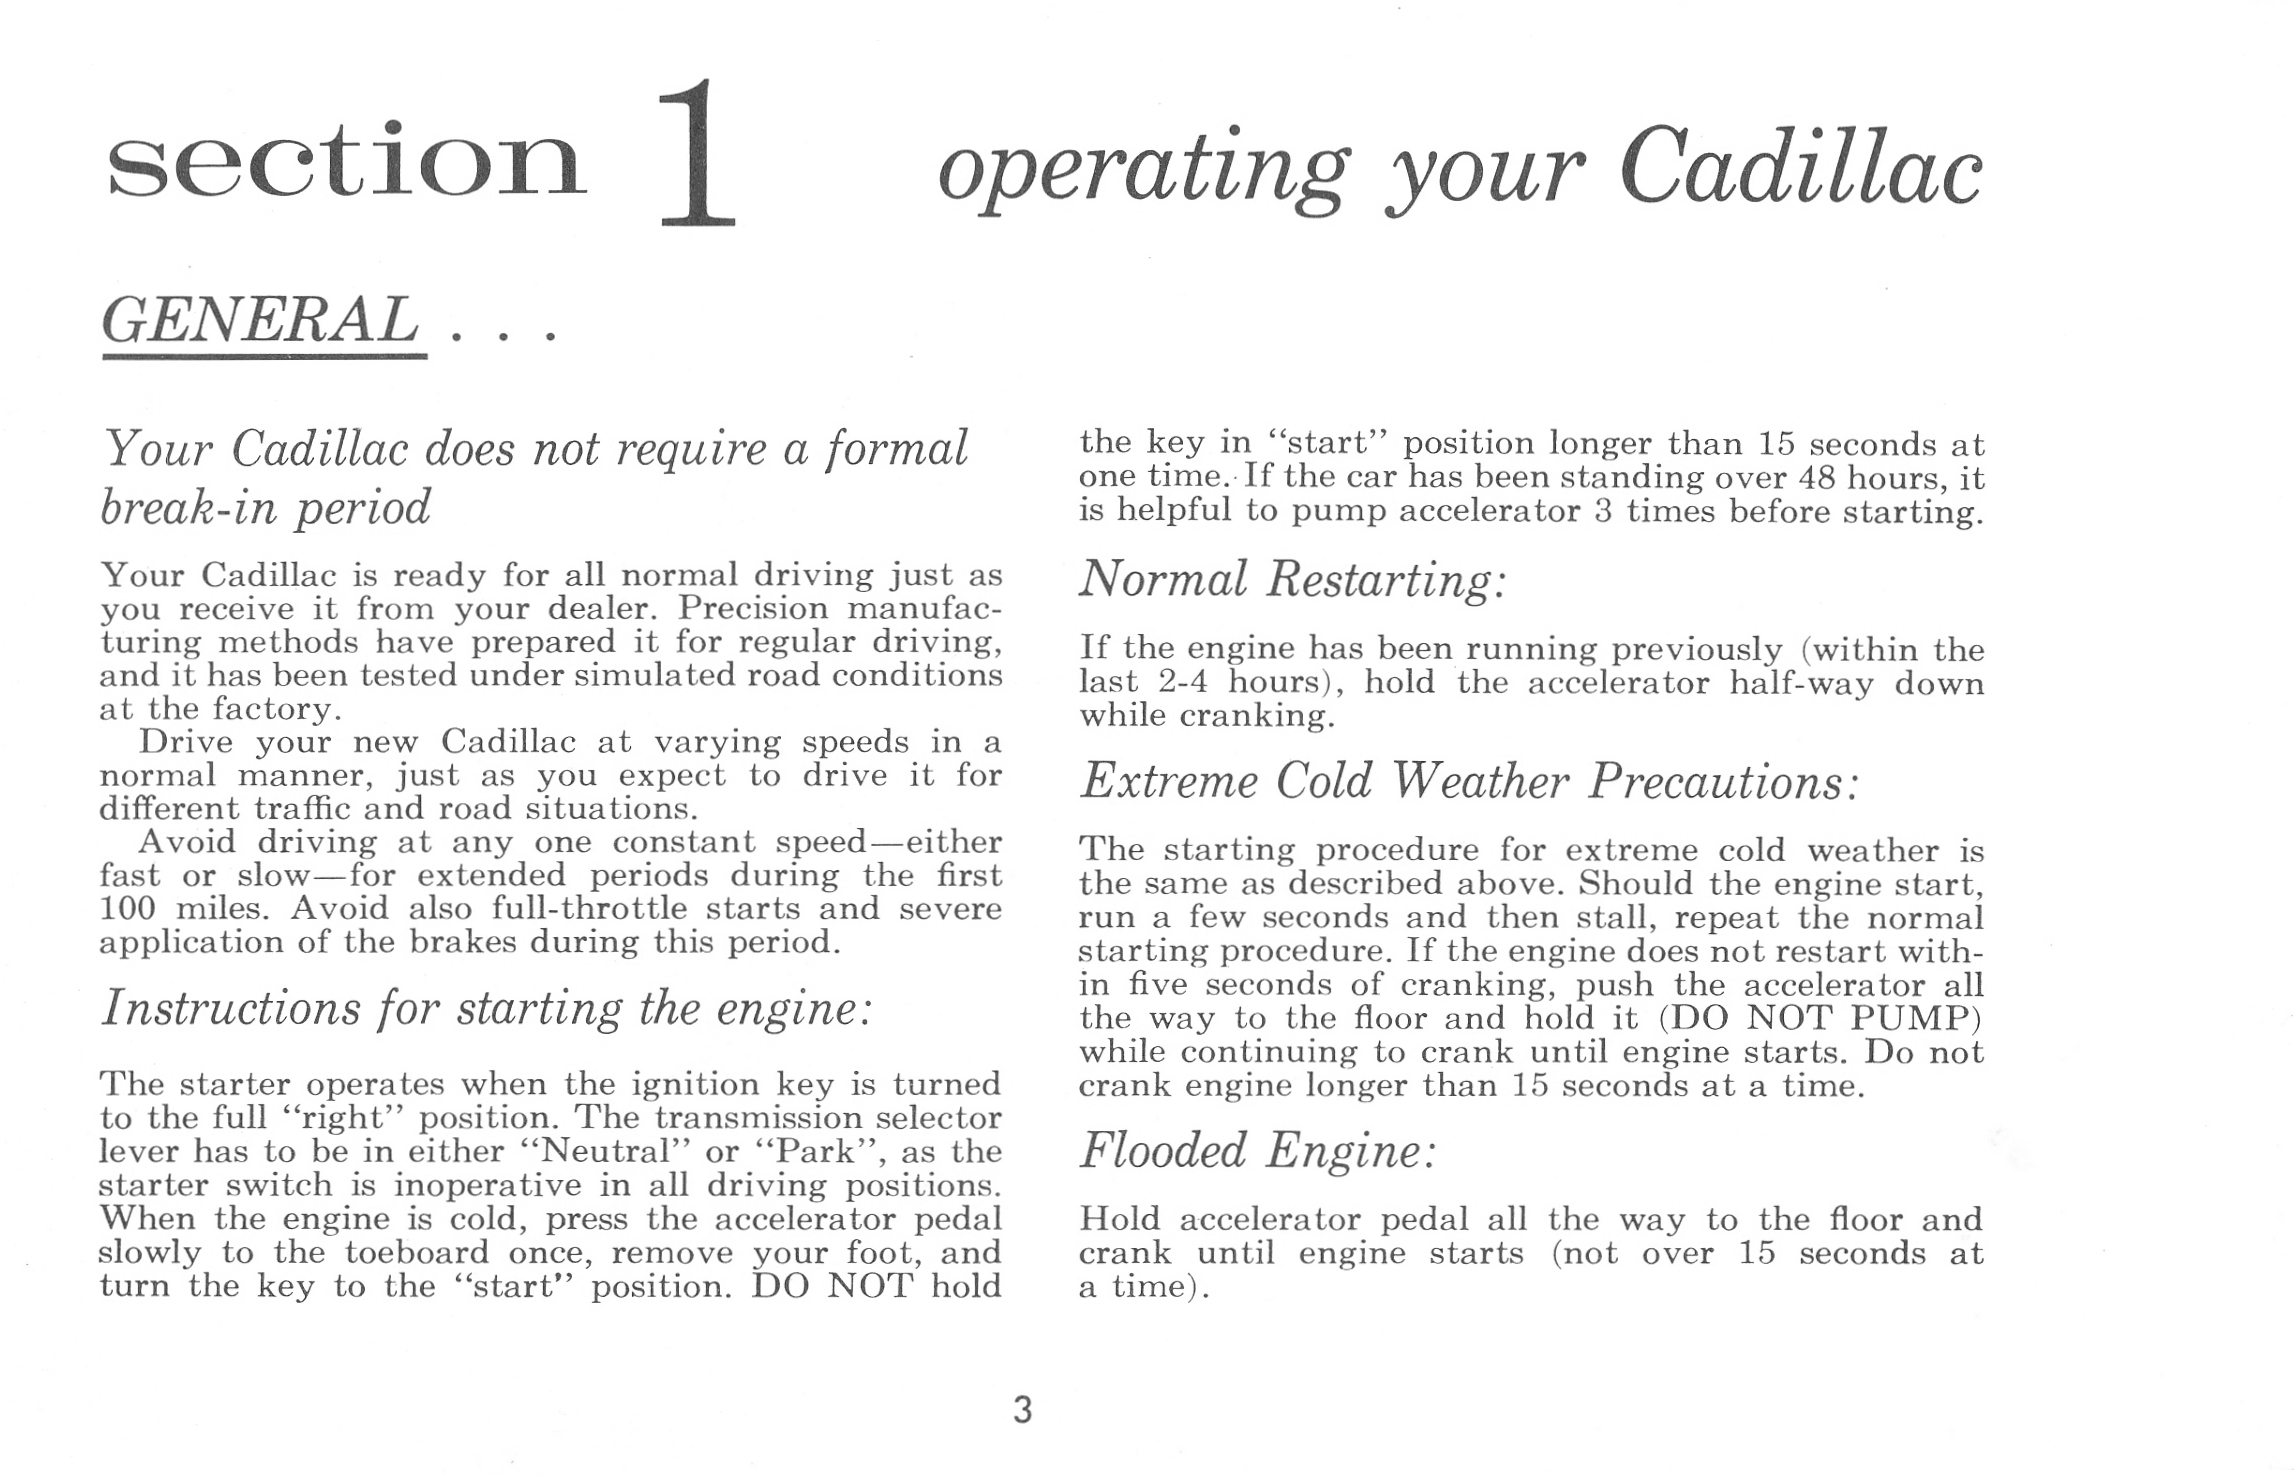 n_1962 Cadillac Owner's Manual-Page 03.jpg